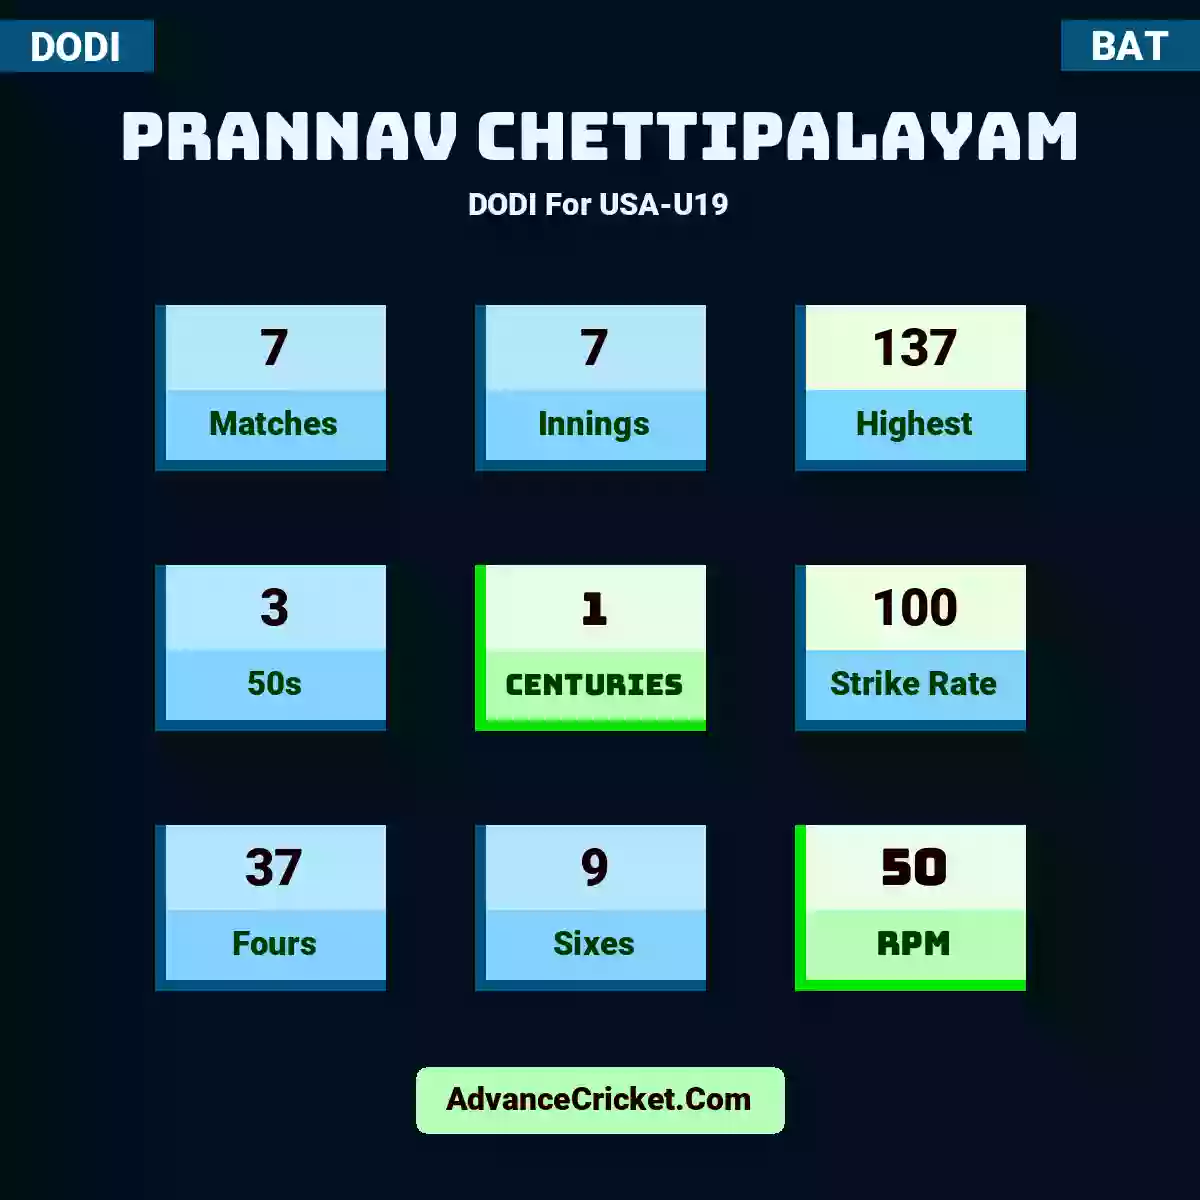 Prannav Chettipalayam DODI  For USA-U19, Prannav Chettipalayam played 7 matches, scored 137 runs as highest, 3 half-centuries, and 1 centuries, with a strike rate of 100. P.Chettipalayam hit 37 fours and 9 sixes, with an RPM of 50.